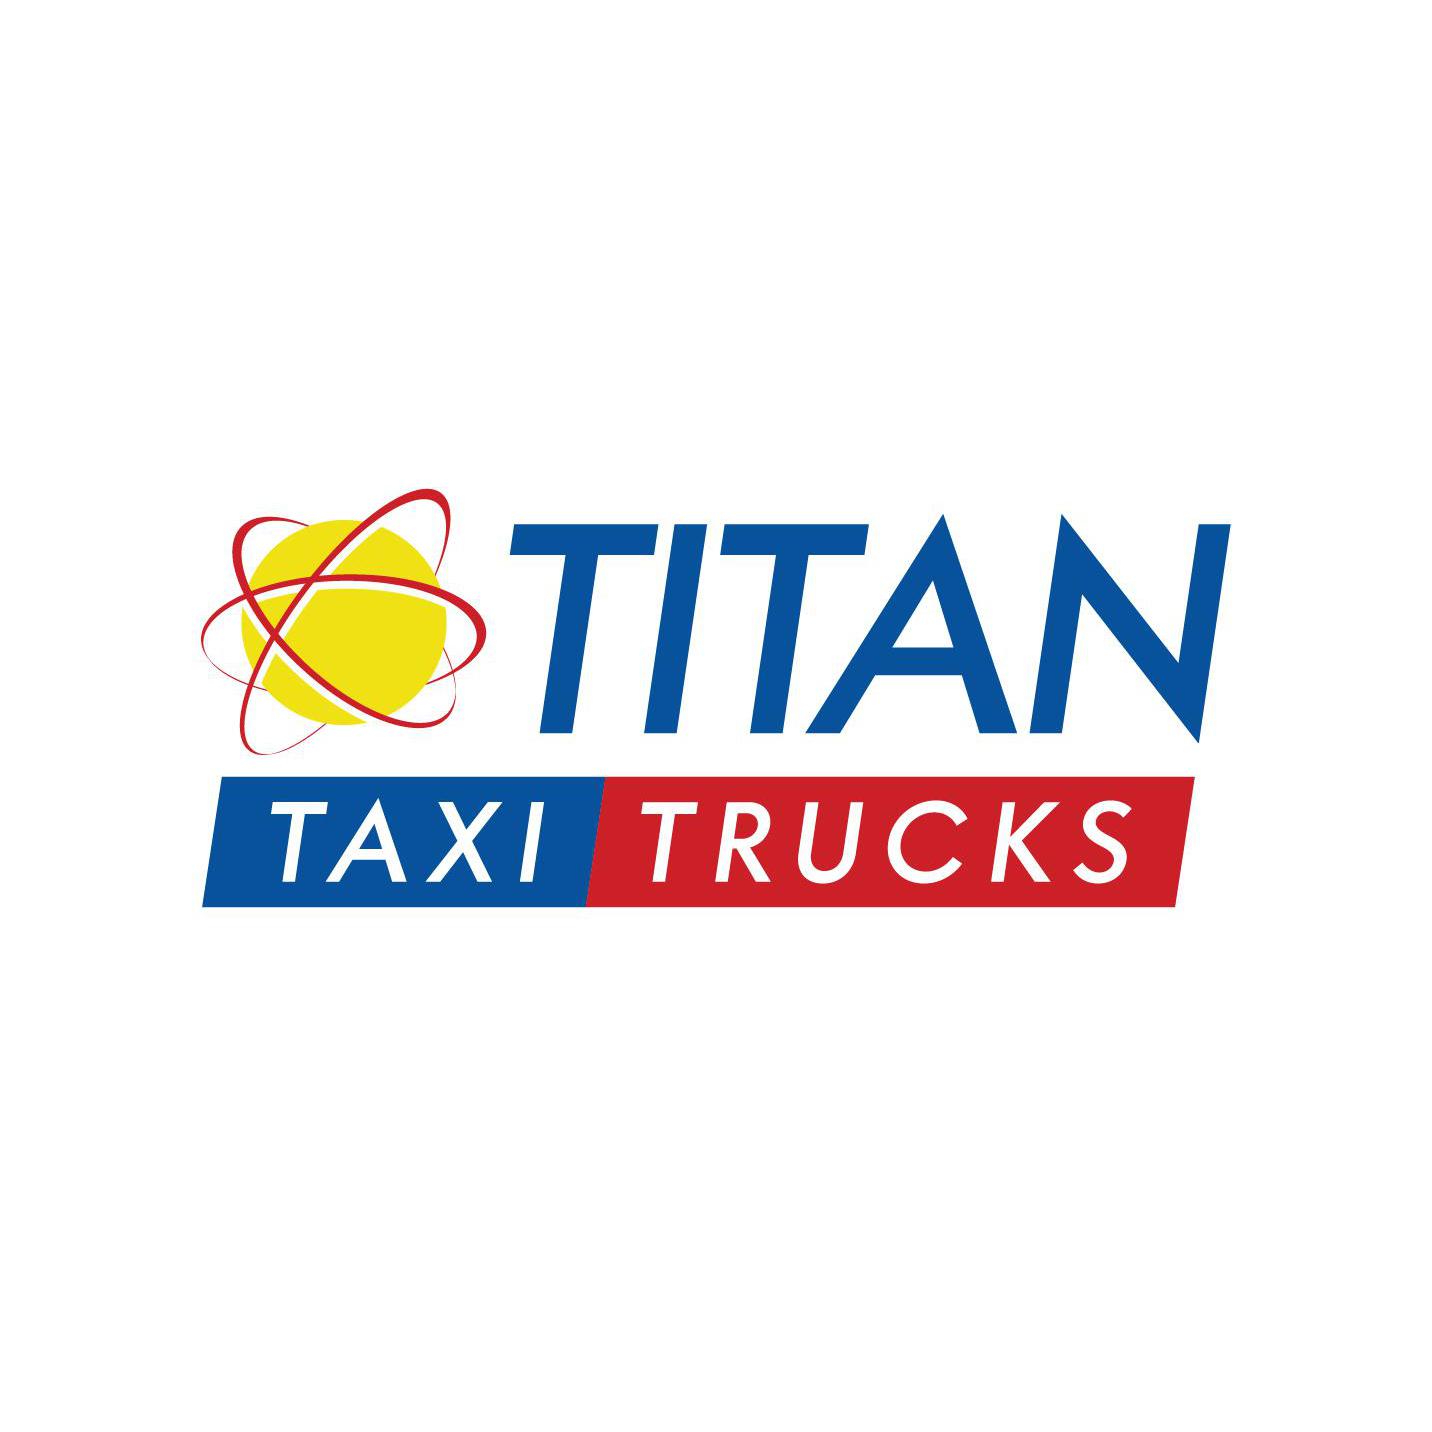 Titan Taxi Trucks Mulgrave 13 10 44